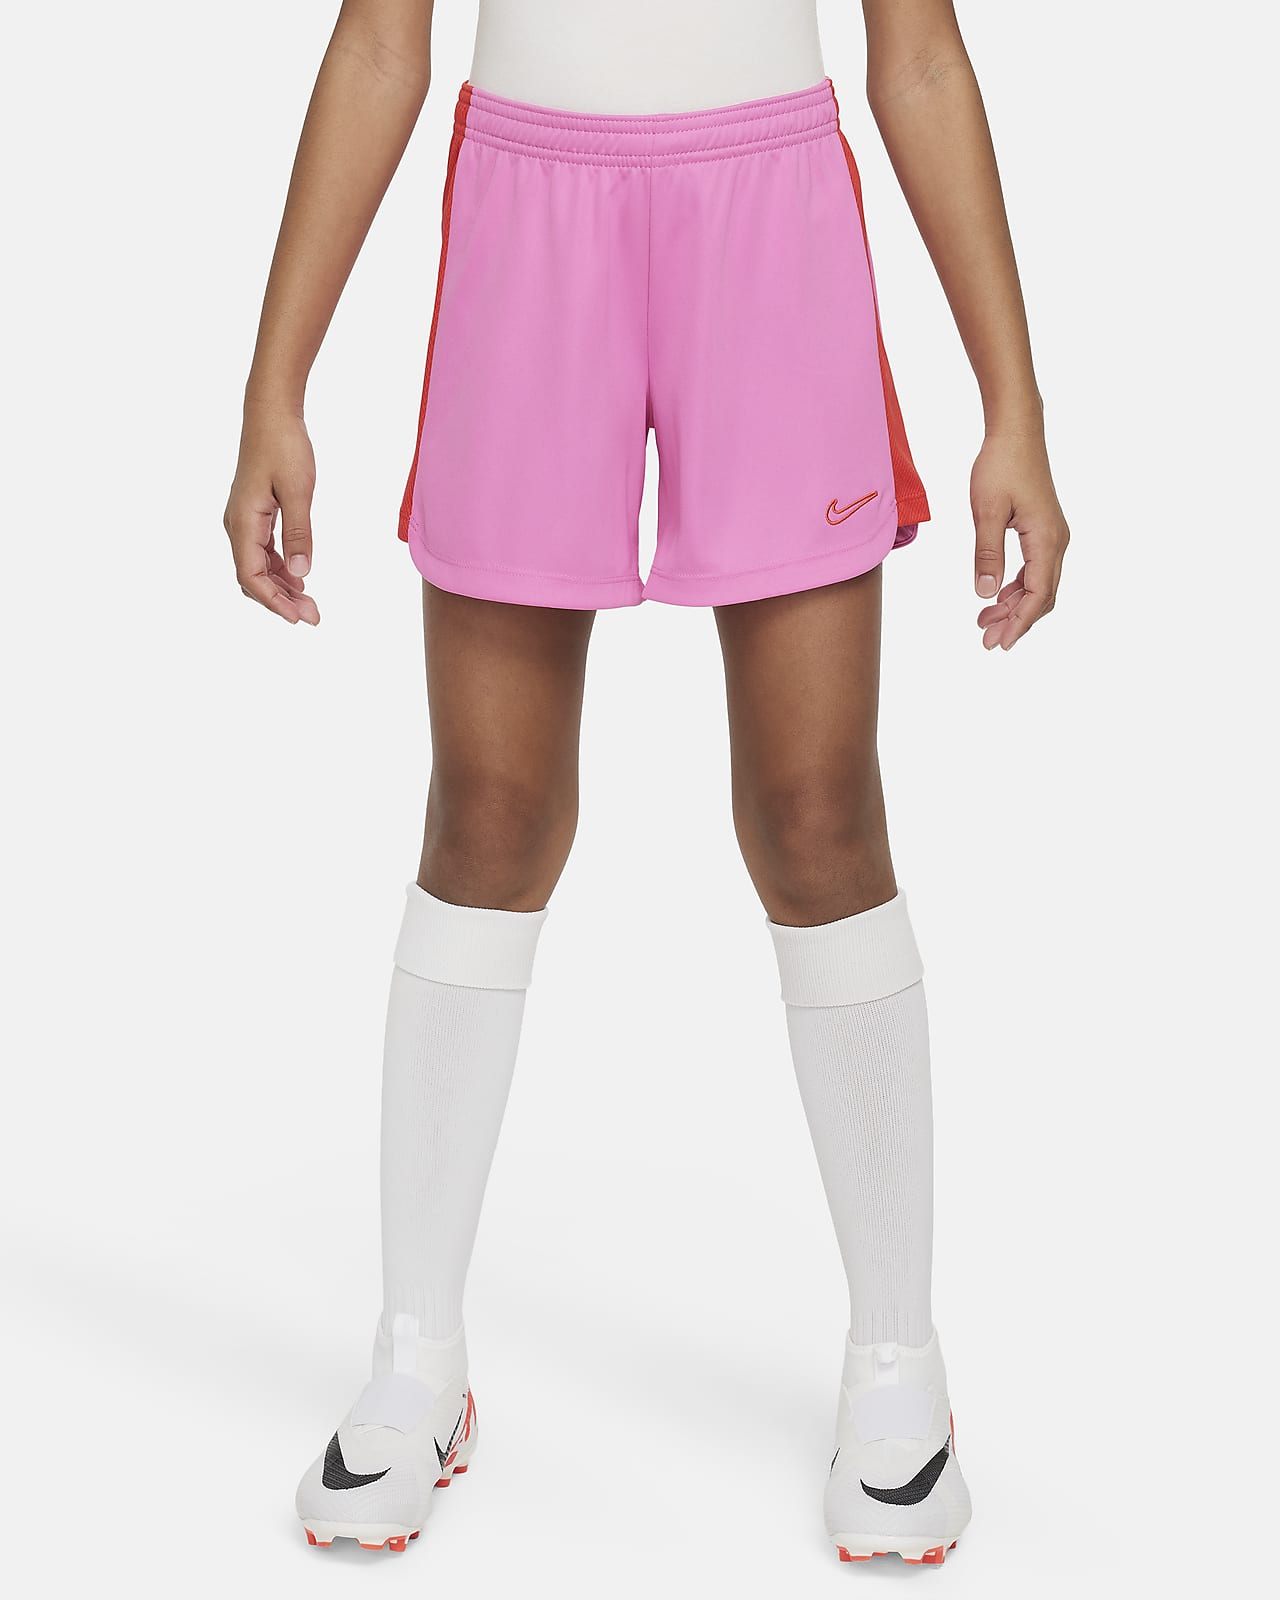 Nike Dri-Fit Running Shorts Girls Youth L Aqua Blue Hot Pink 5